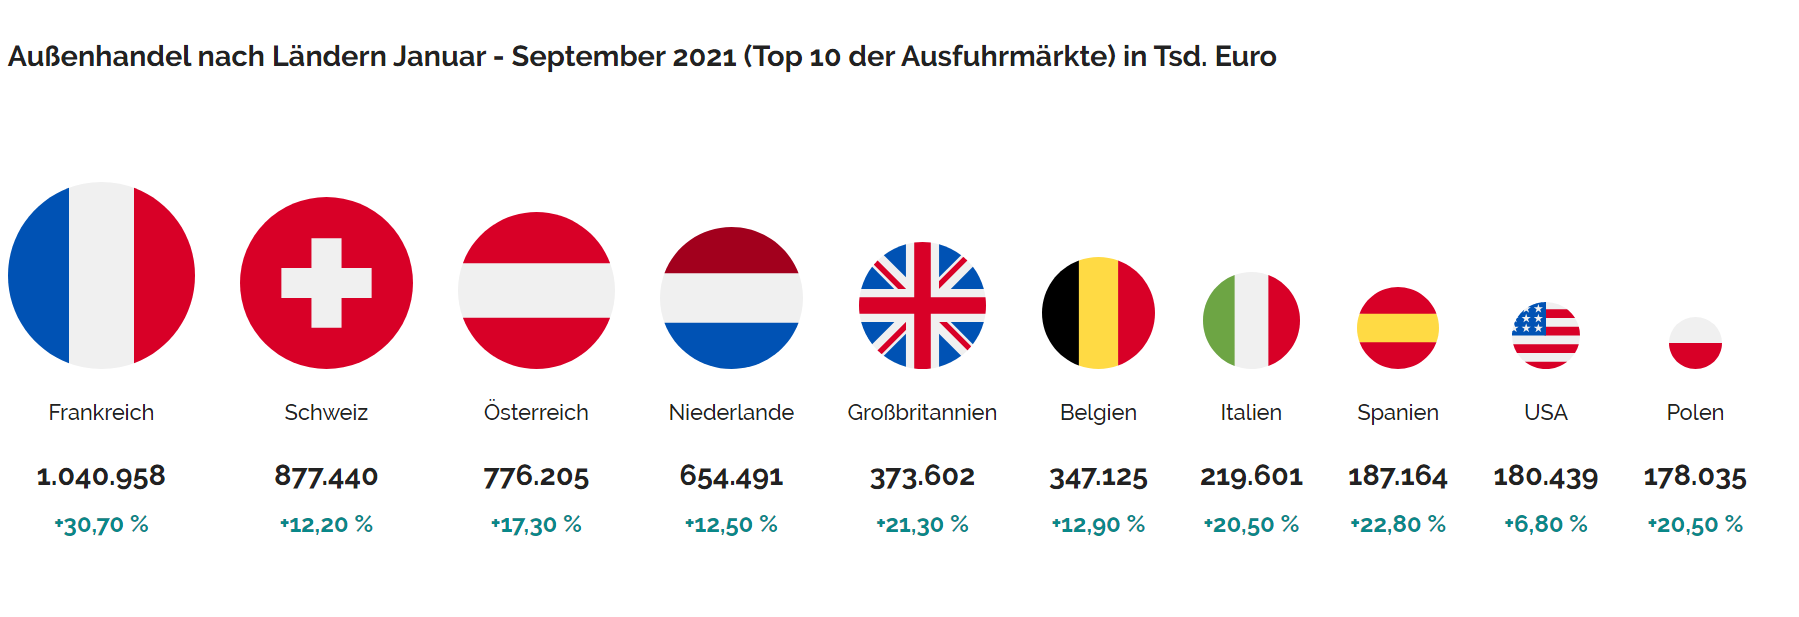 Top-10-Ausfuhrlaender-Jan-Sept-2021